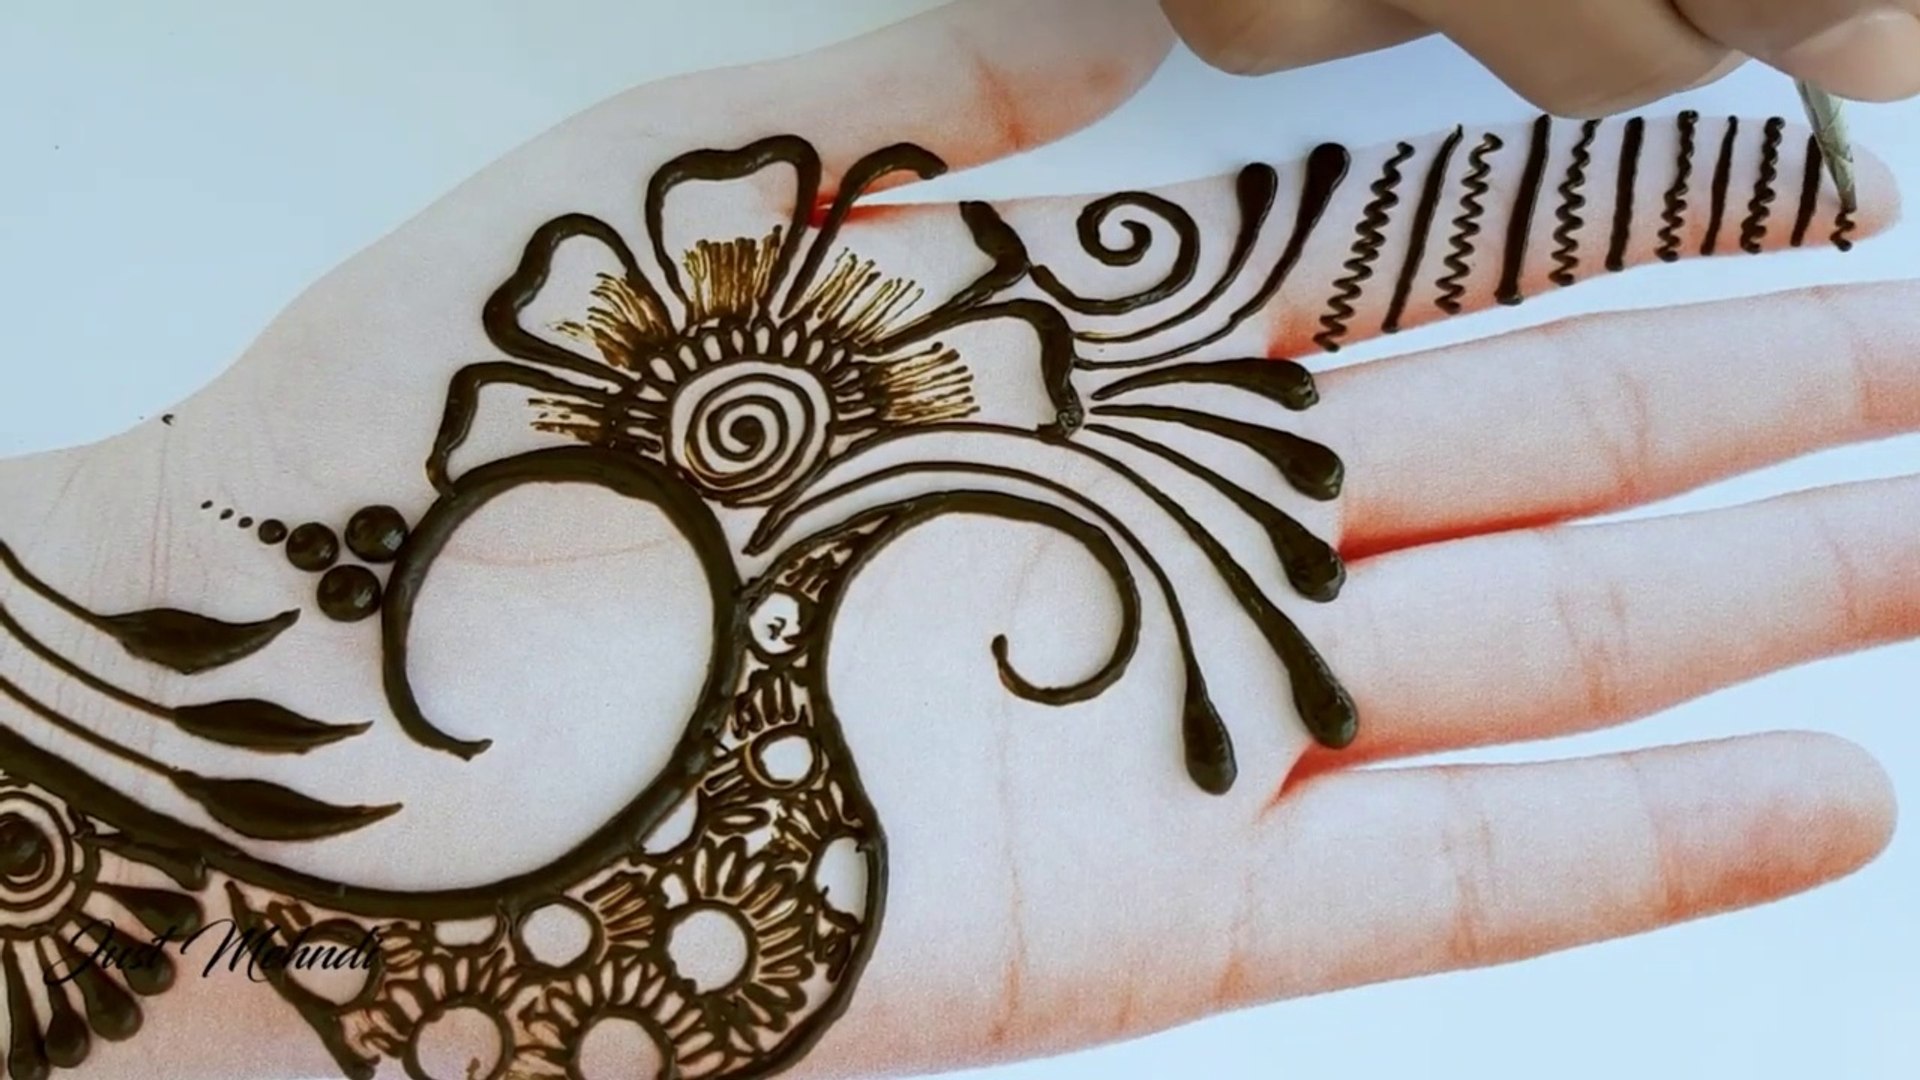 New latest Mehendi design front hand Simple Henna designs 2021 - Easy  Mehndi design for hands 